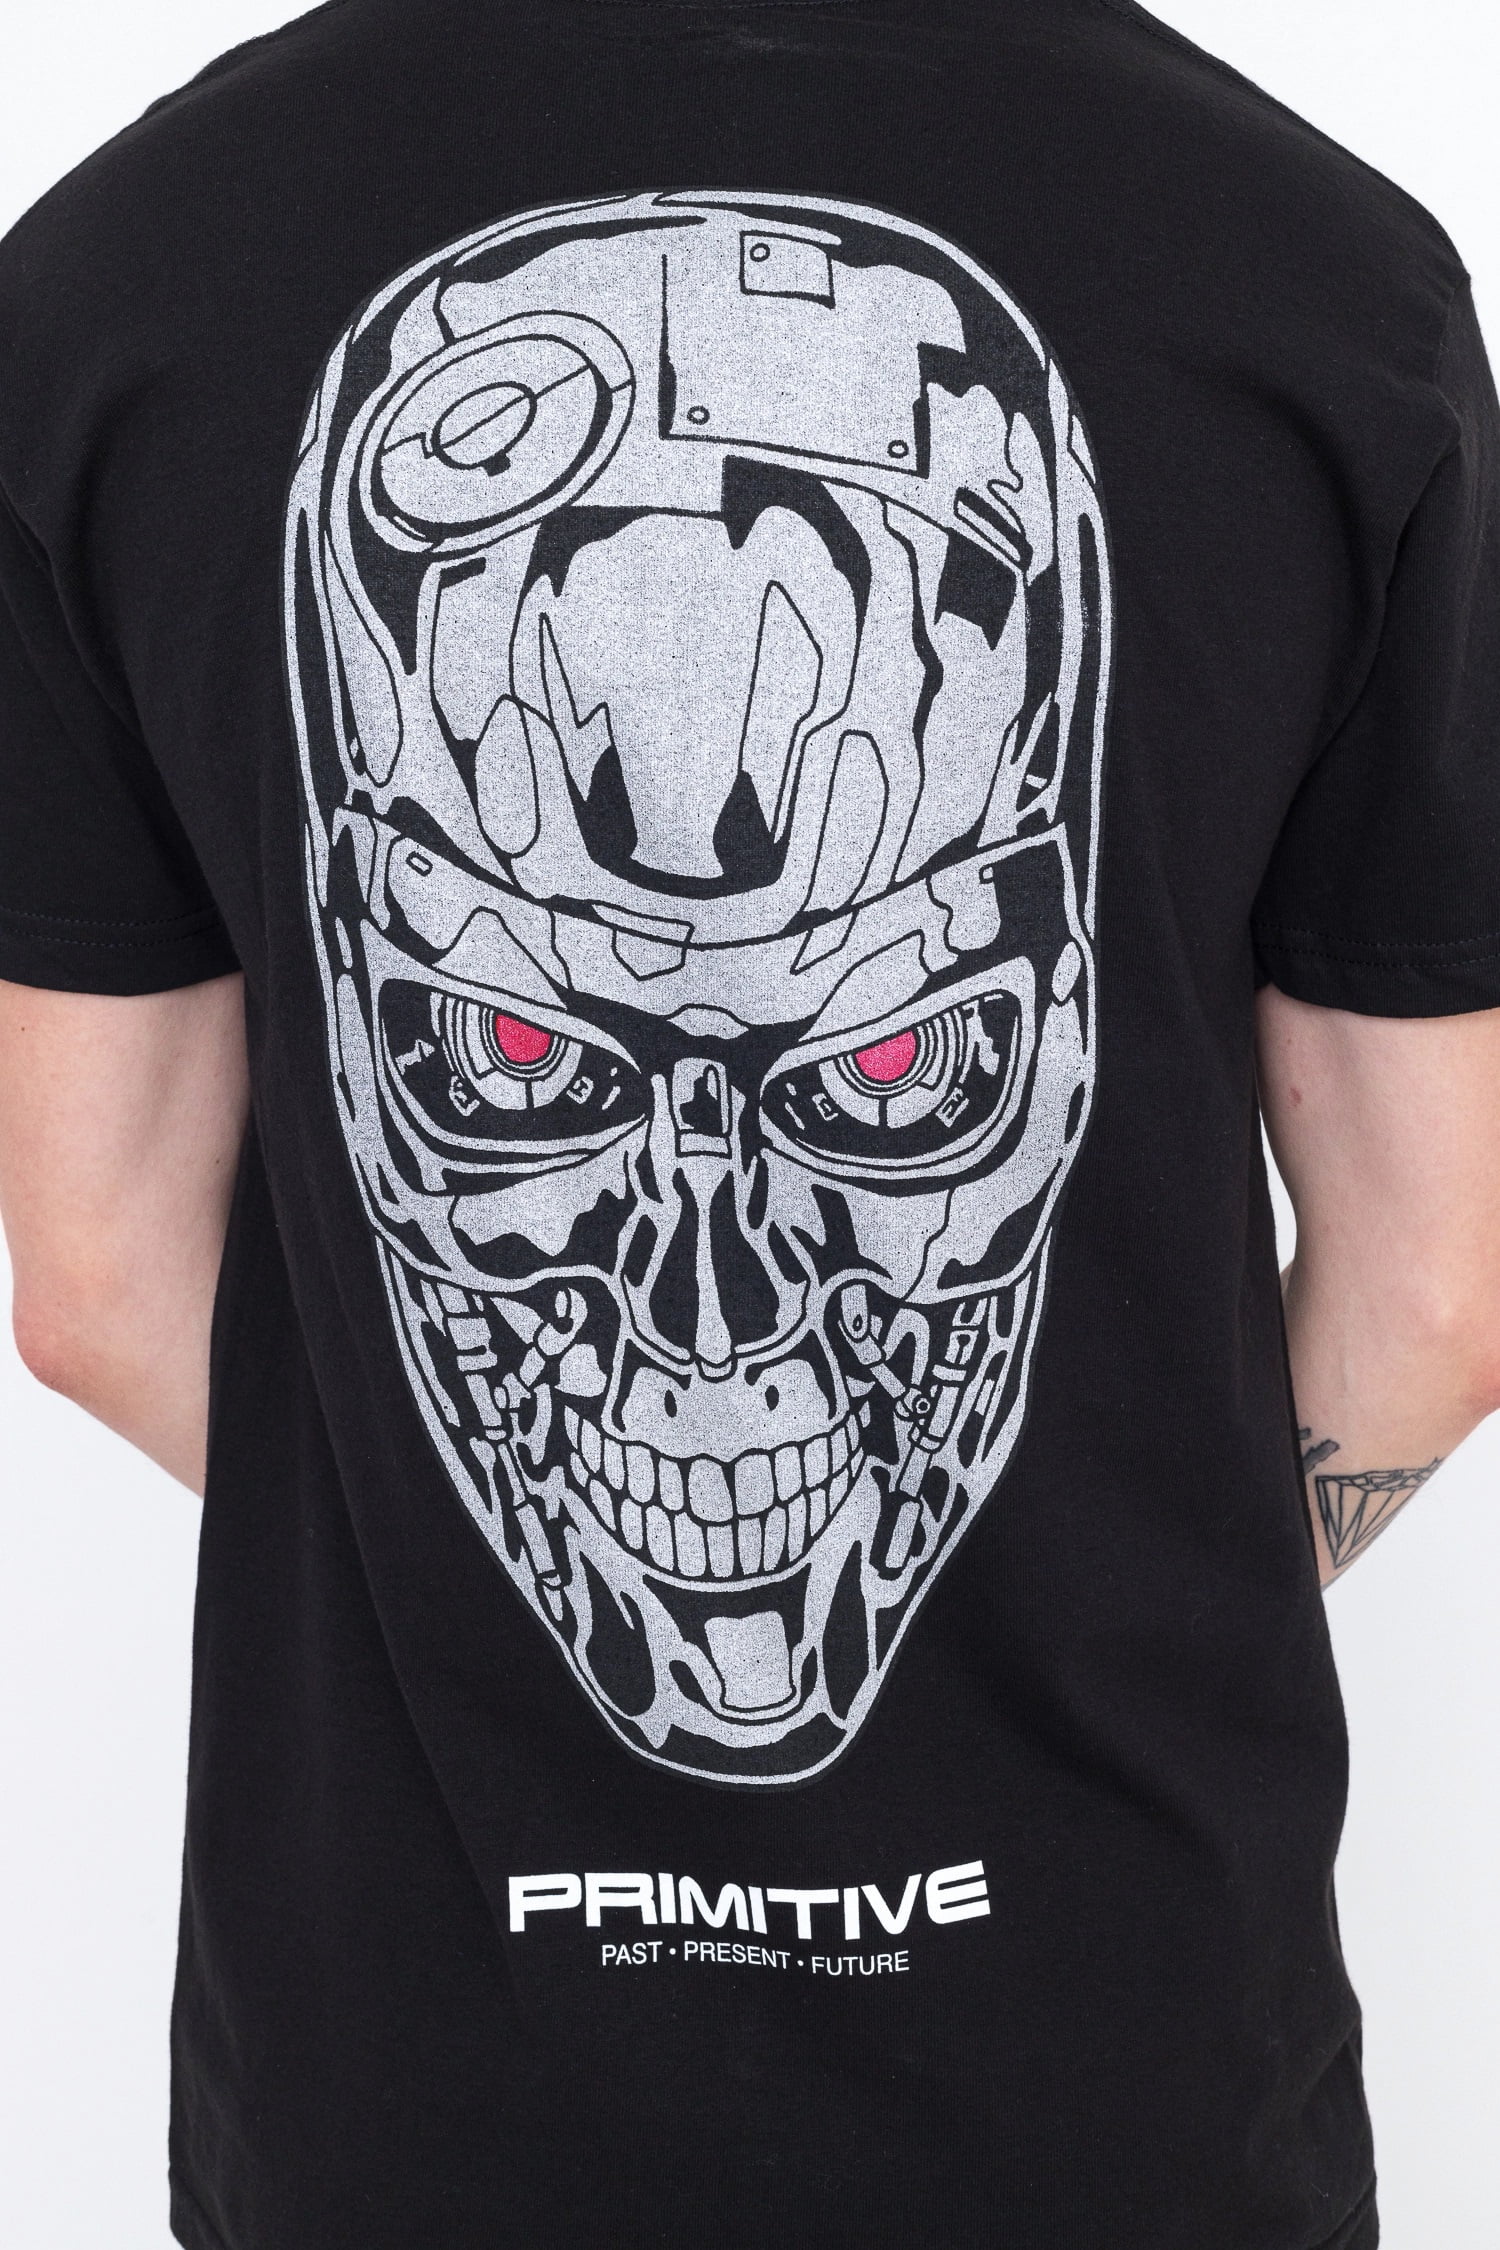 Sporvogn farve tømmerflåde Primitive Skateboarding Apparel Men's X Terminator 2 Skynet Tee T-Shirt  (Medium, Black) - Walmart.com